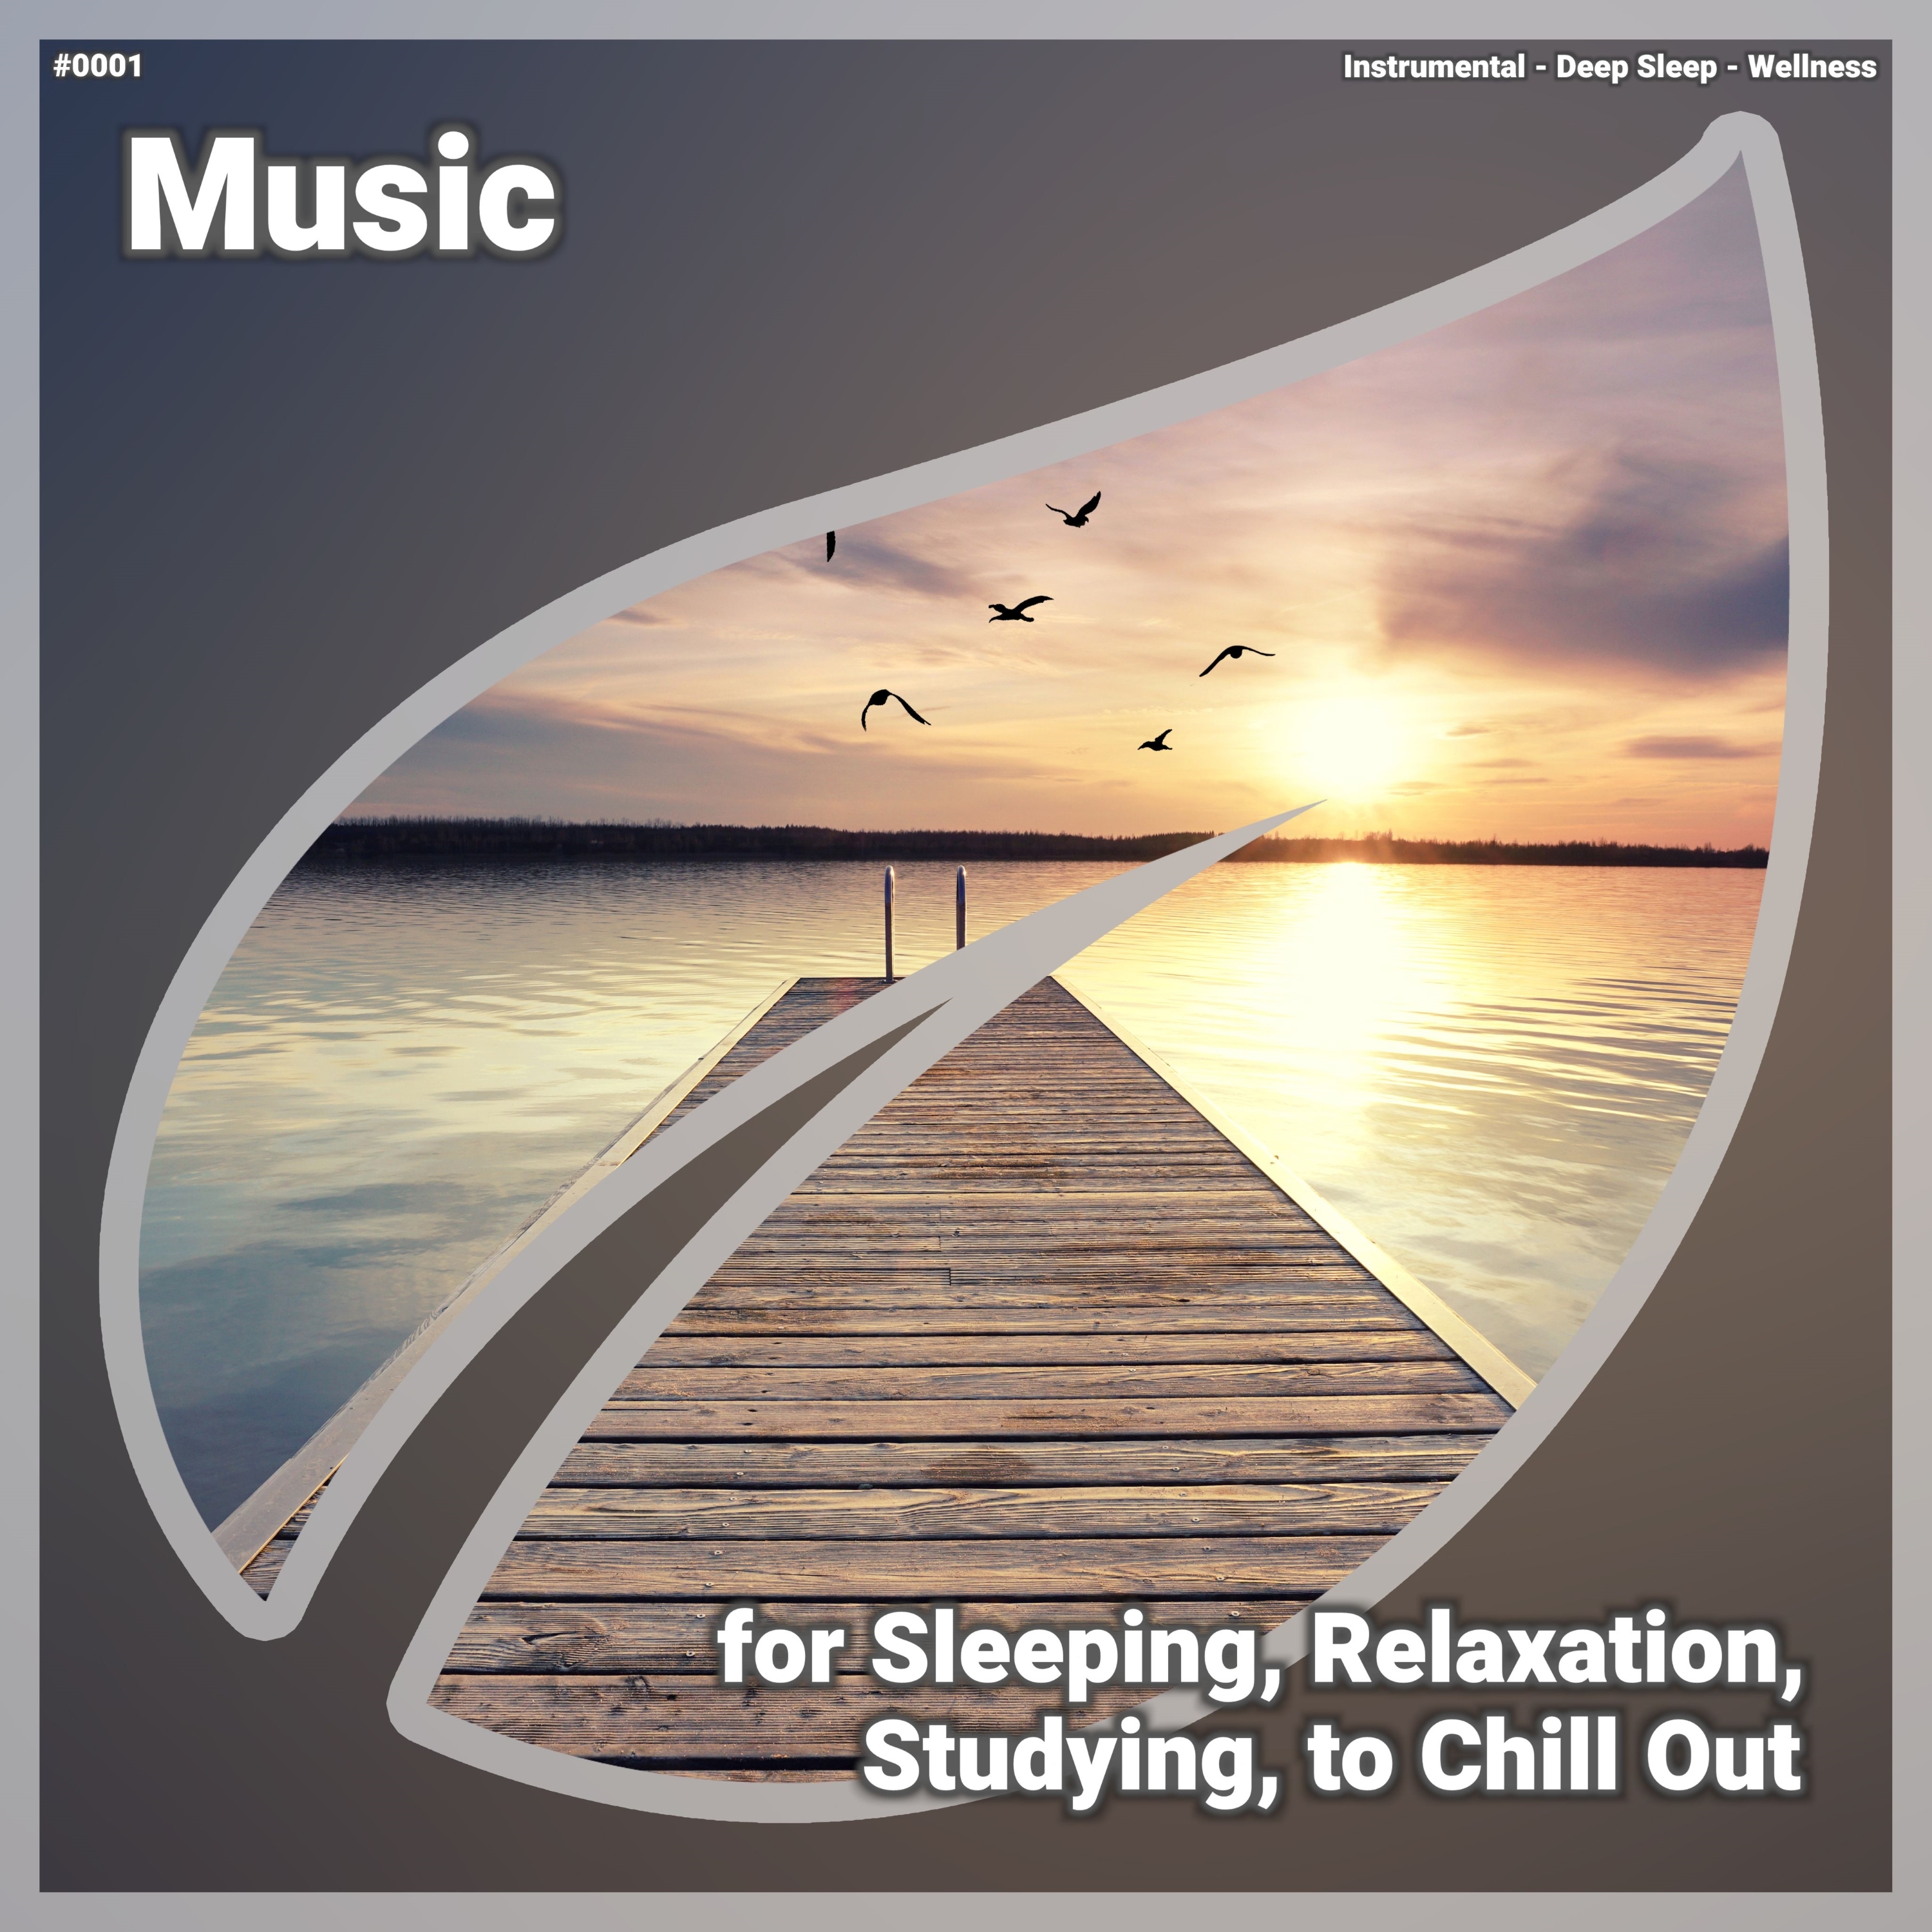 डाउनलोड करा Relaxing Music, Pt. 88